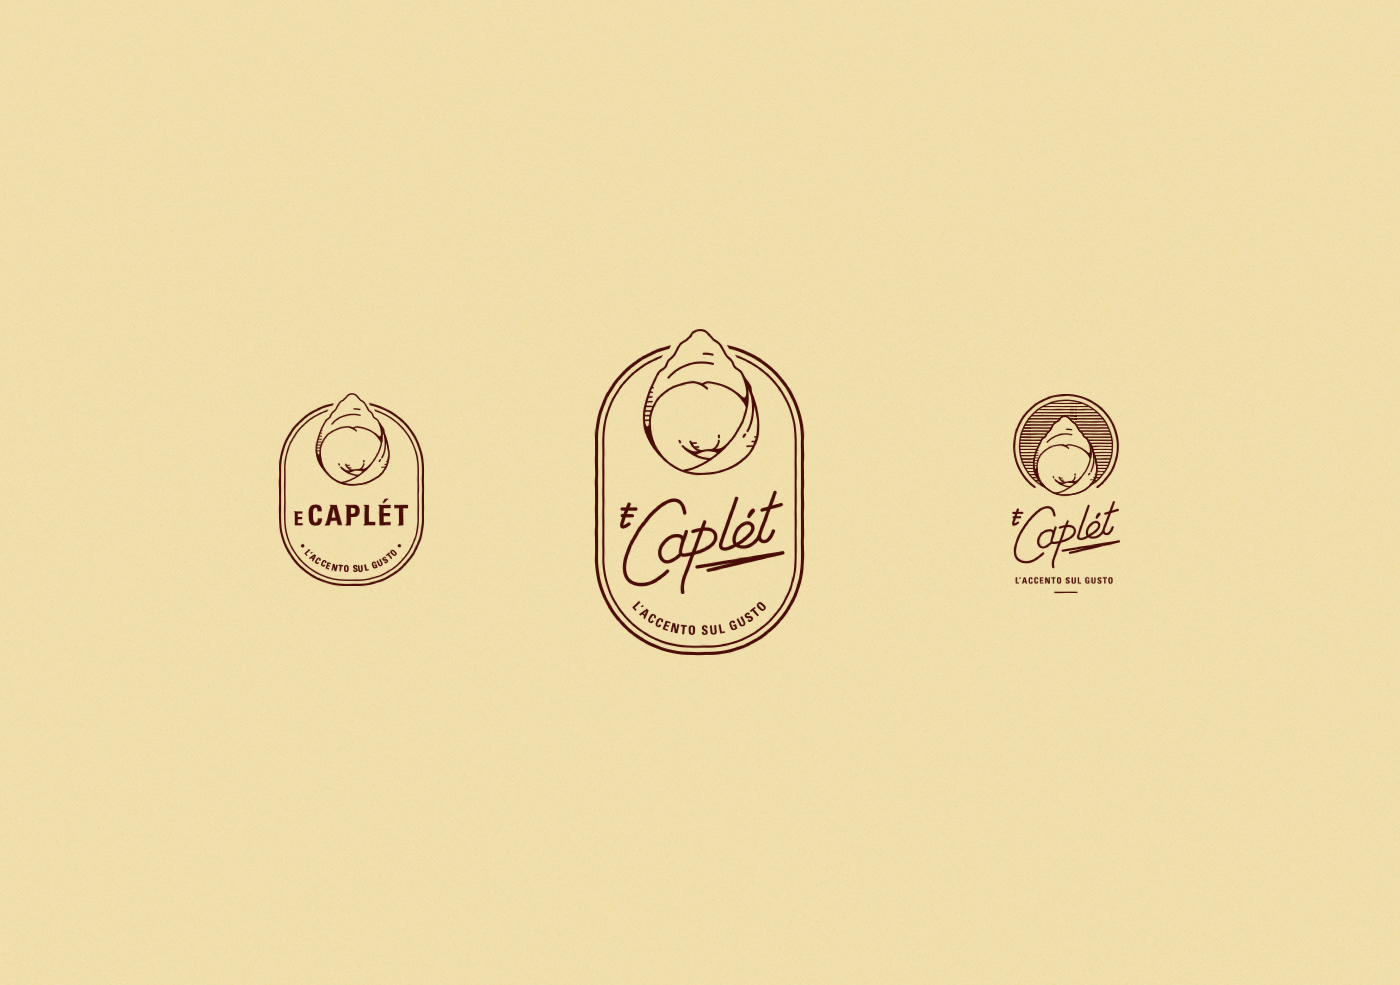 Logo Design fencing opera beer Pasta soccer graphic design 